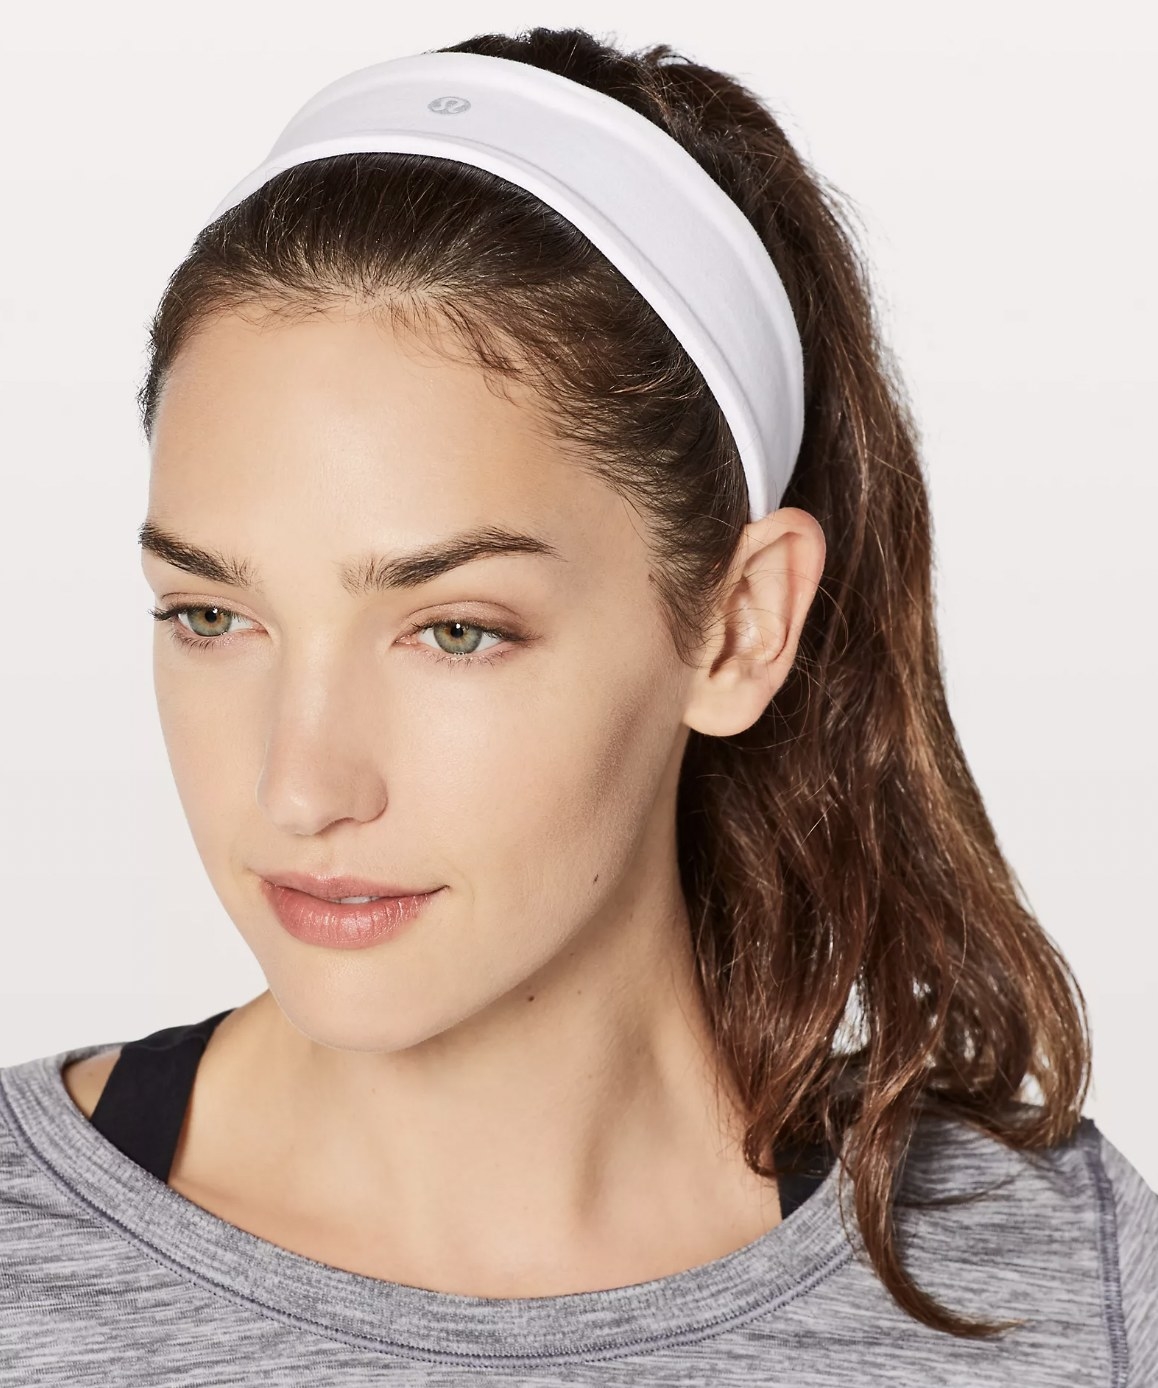 Model wearing the white headband